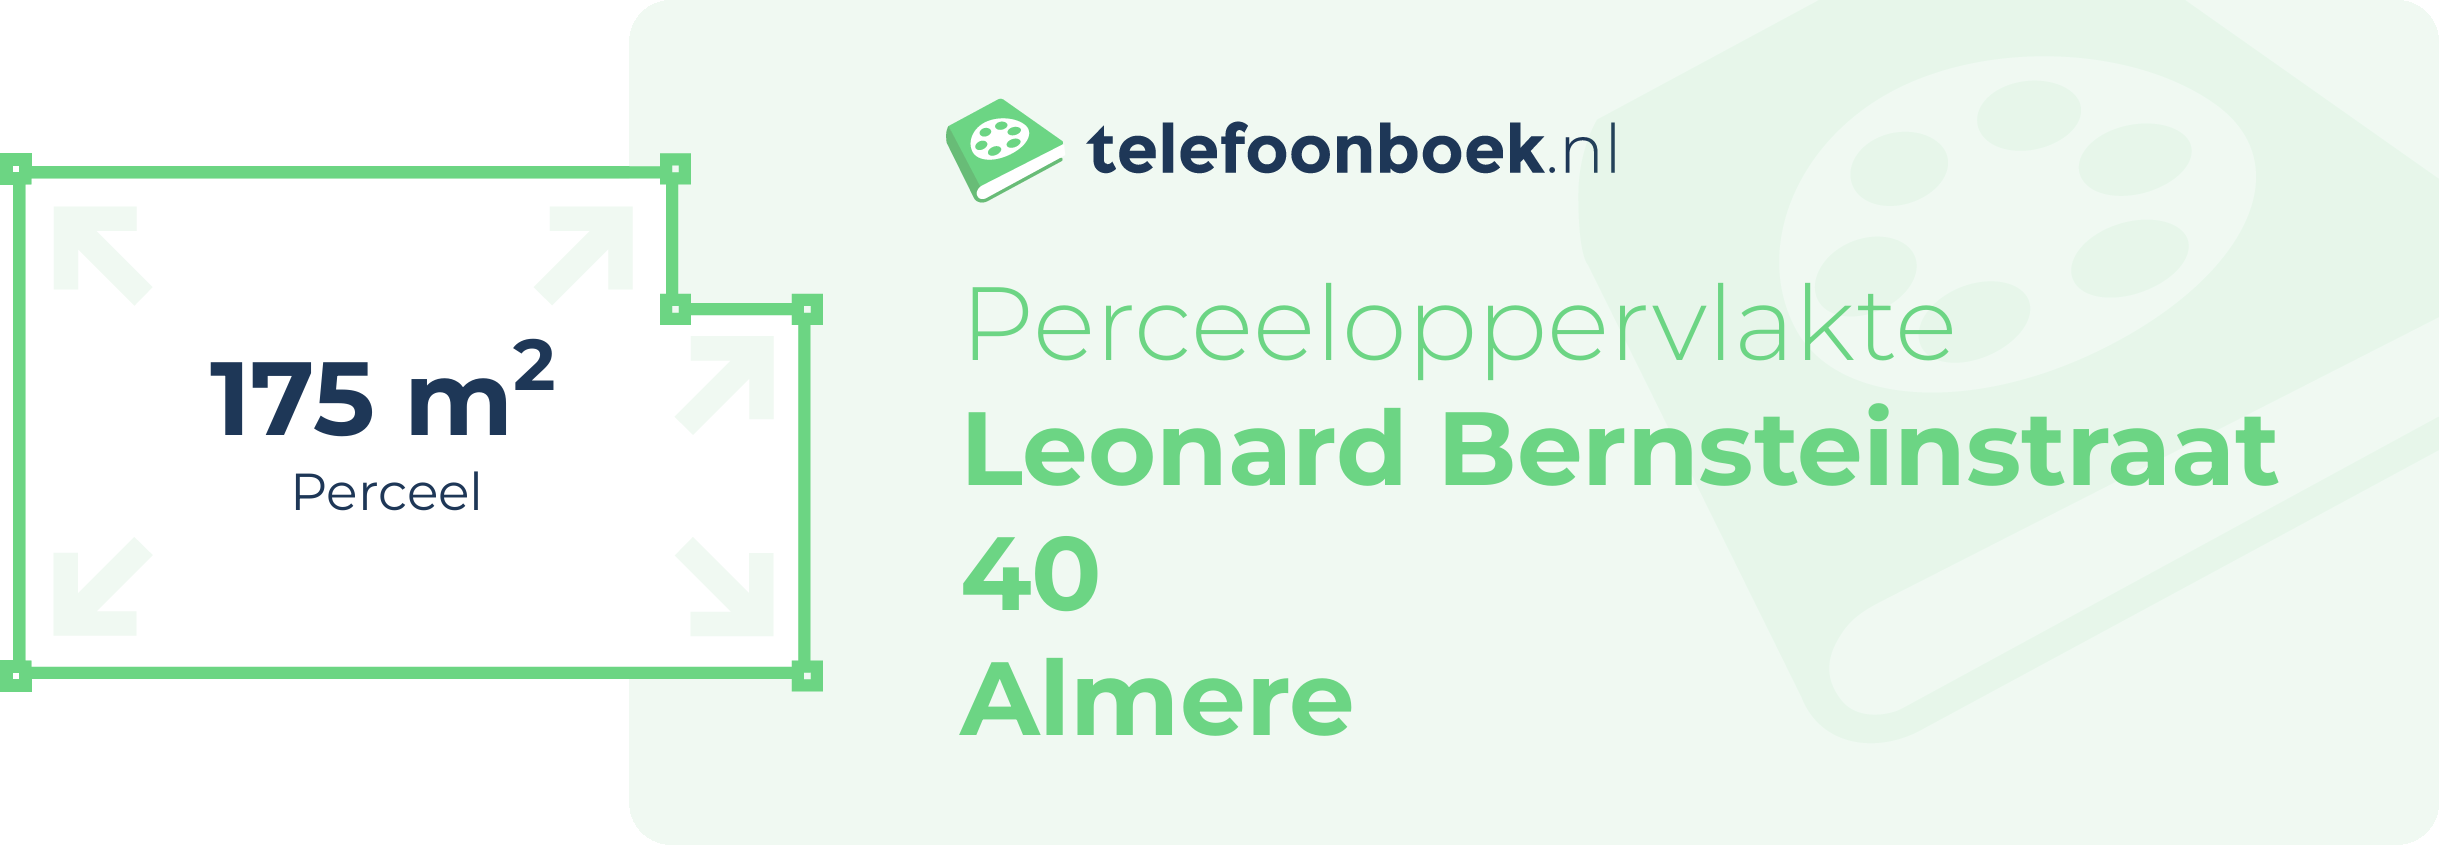 Perceeloppervlakte Leonard Bernsteinstraat 40 Almere